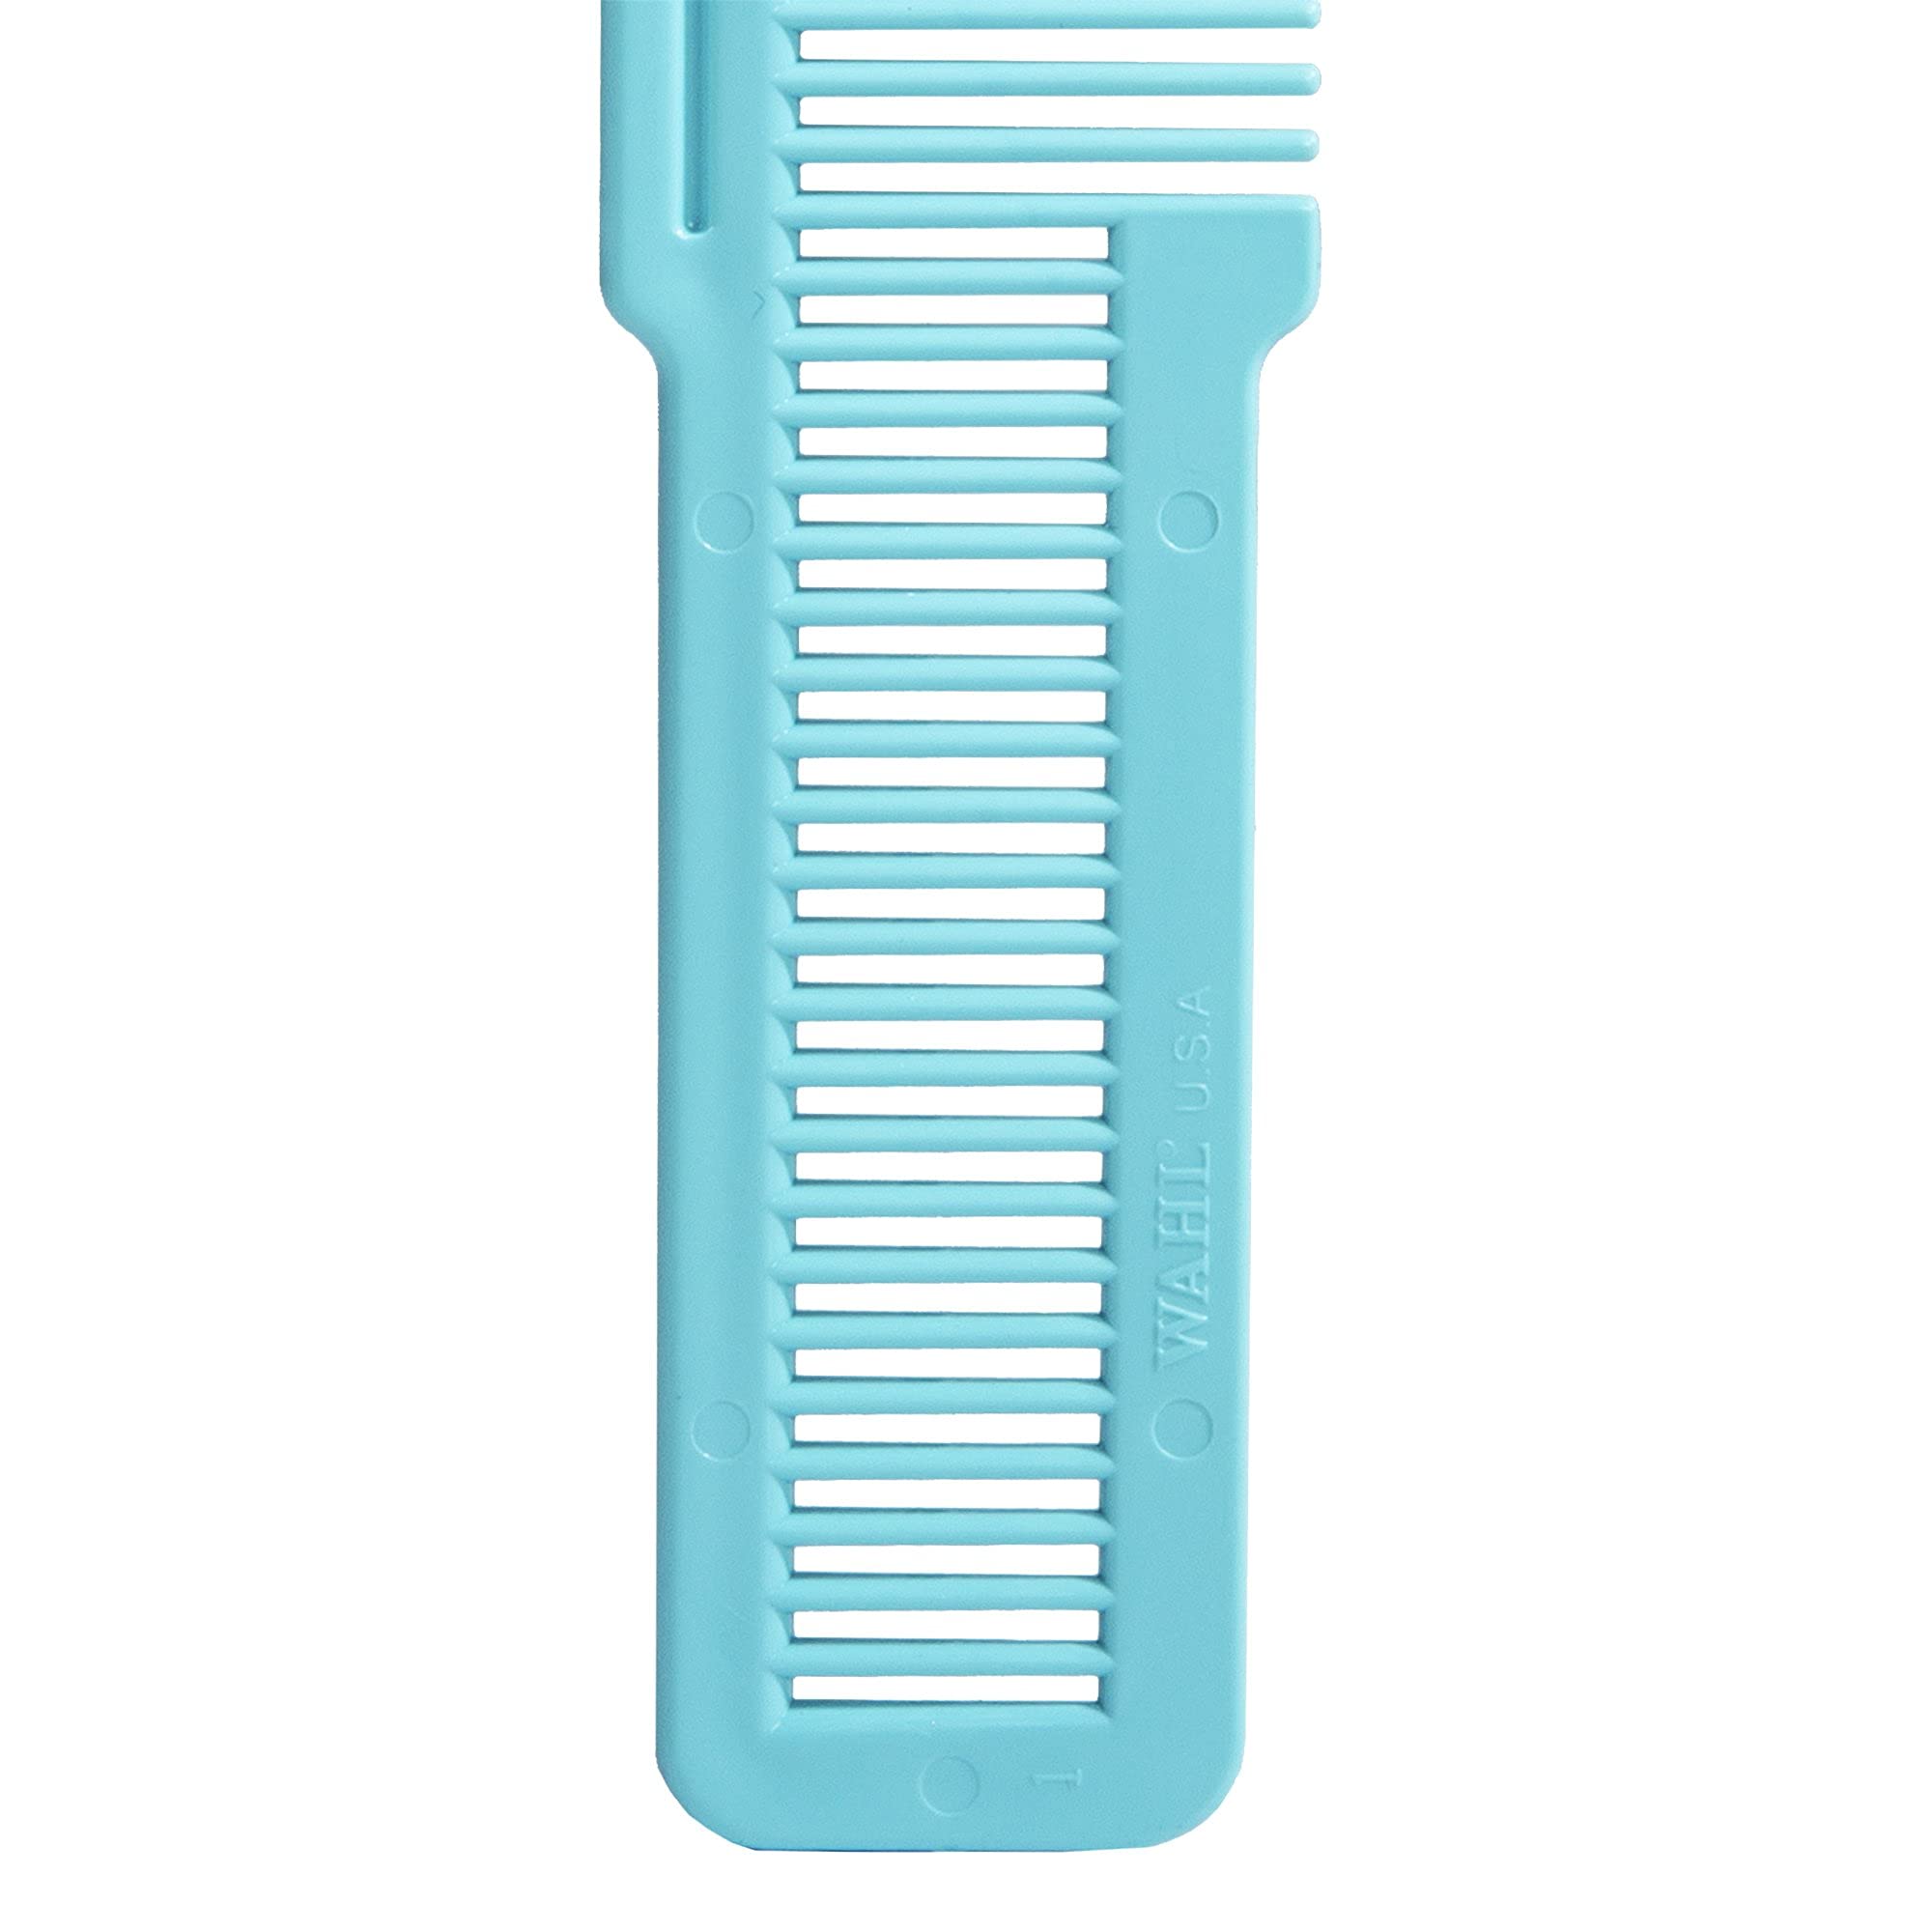 Wahl Professional 5 Star Balding Clipper & Wahl Professional Large Styling Aqua Comb Bundle